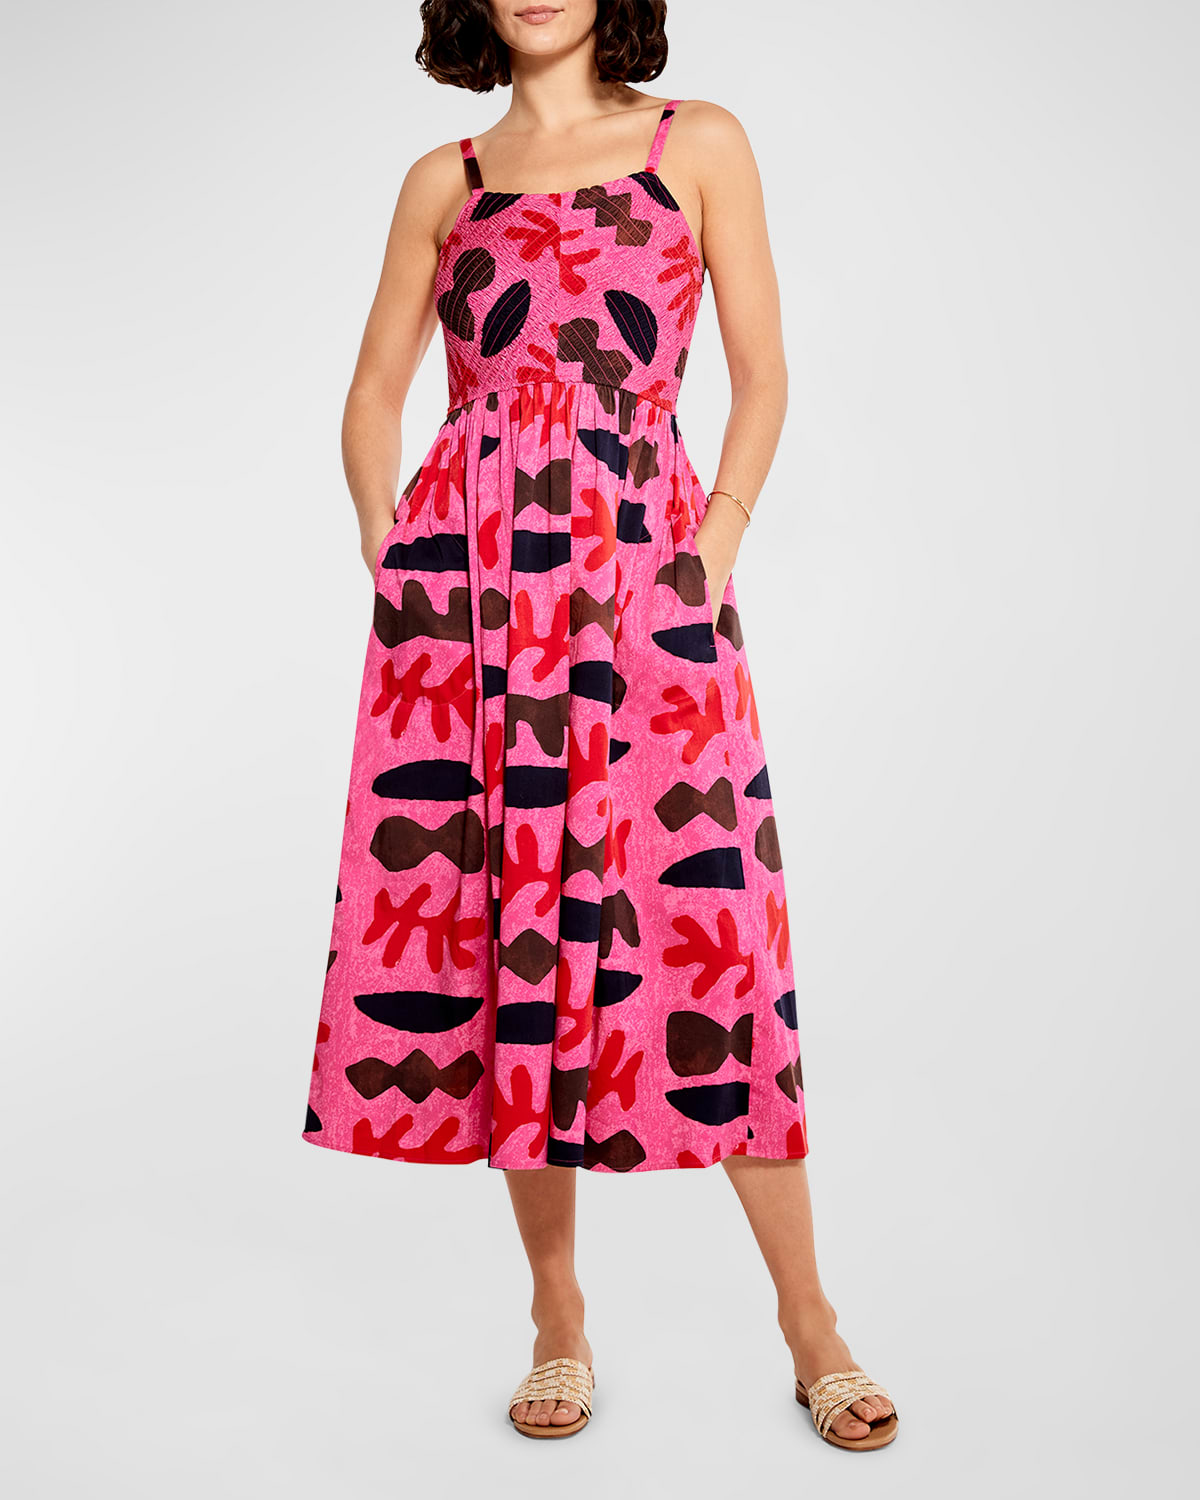 Tory Burch Printed Silk Smocked Midi Dress Neiman Marcus 9541